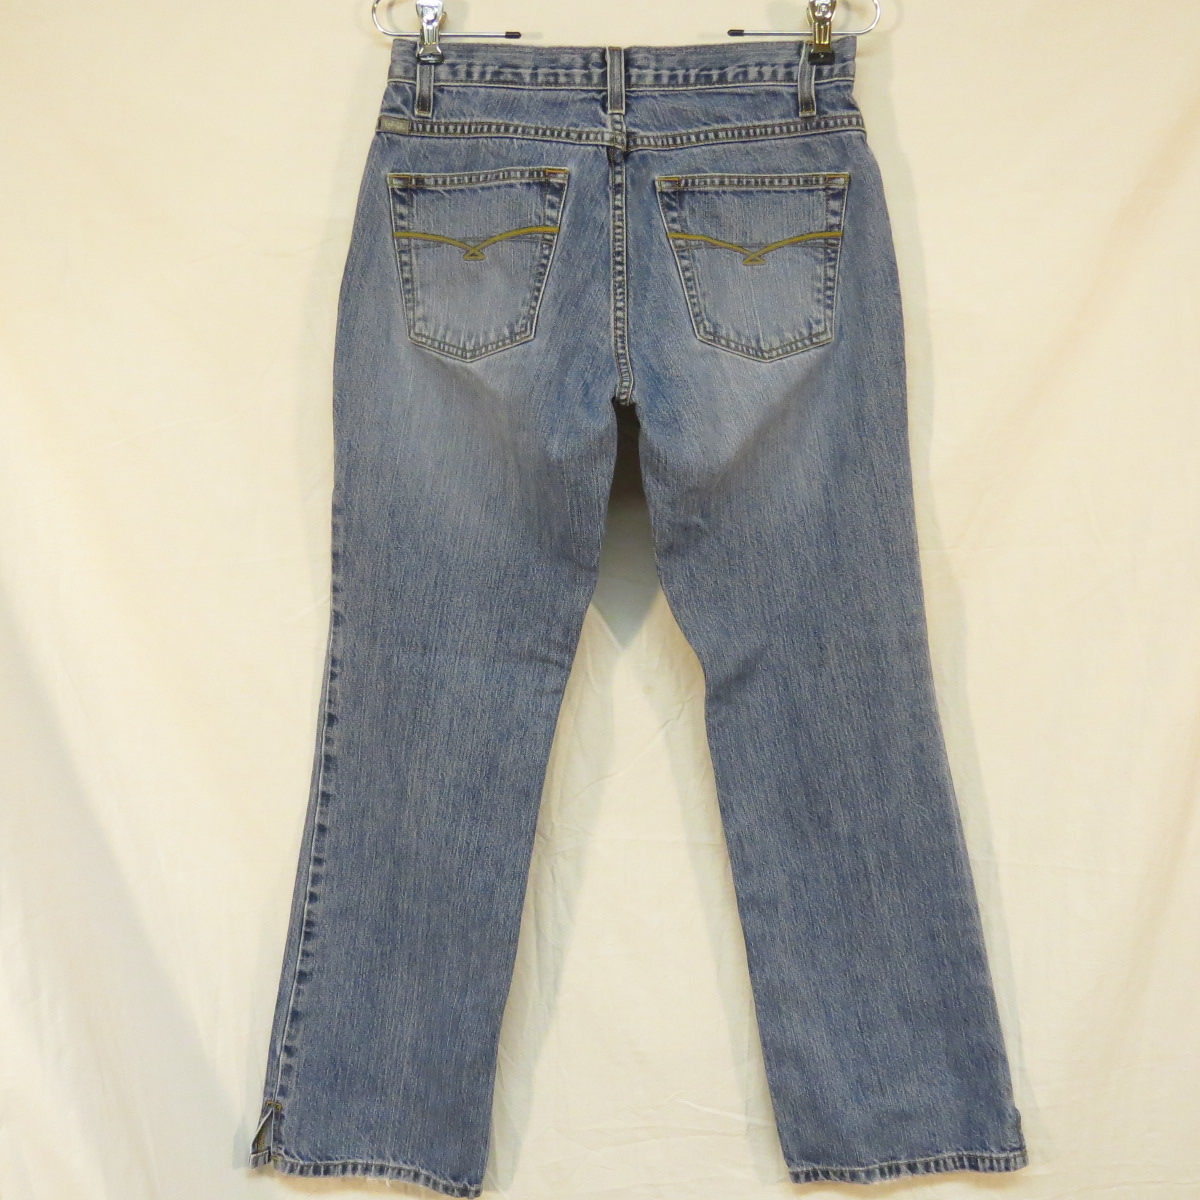 Cruel Girl Slim CB51253001 Jeans Size 9 Regular | eBay